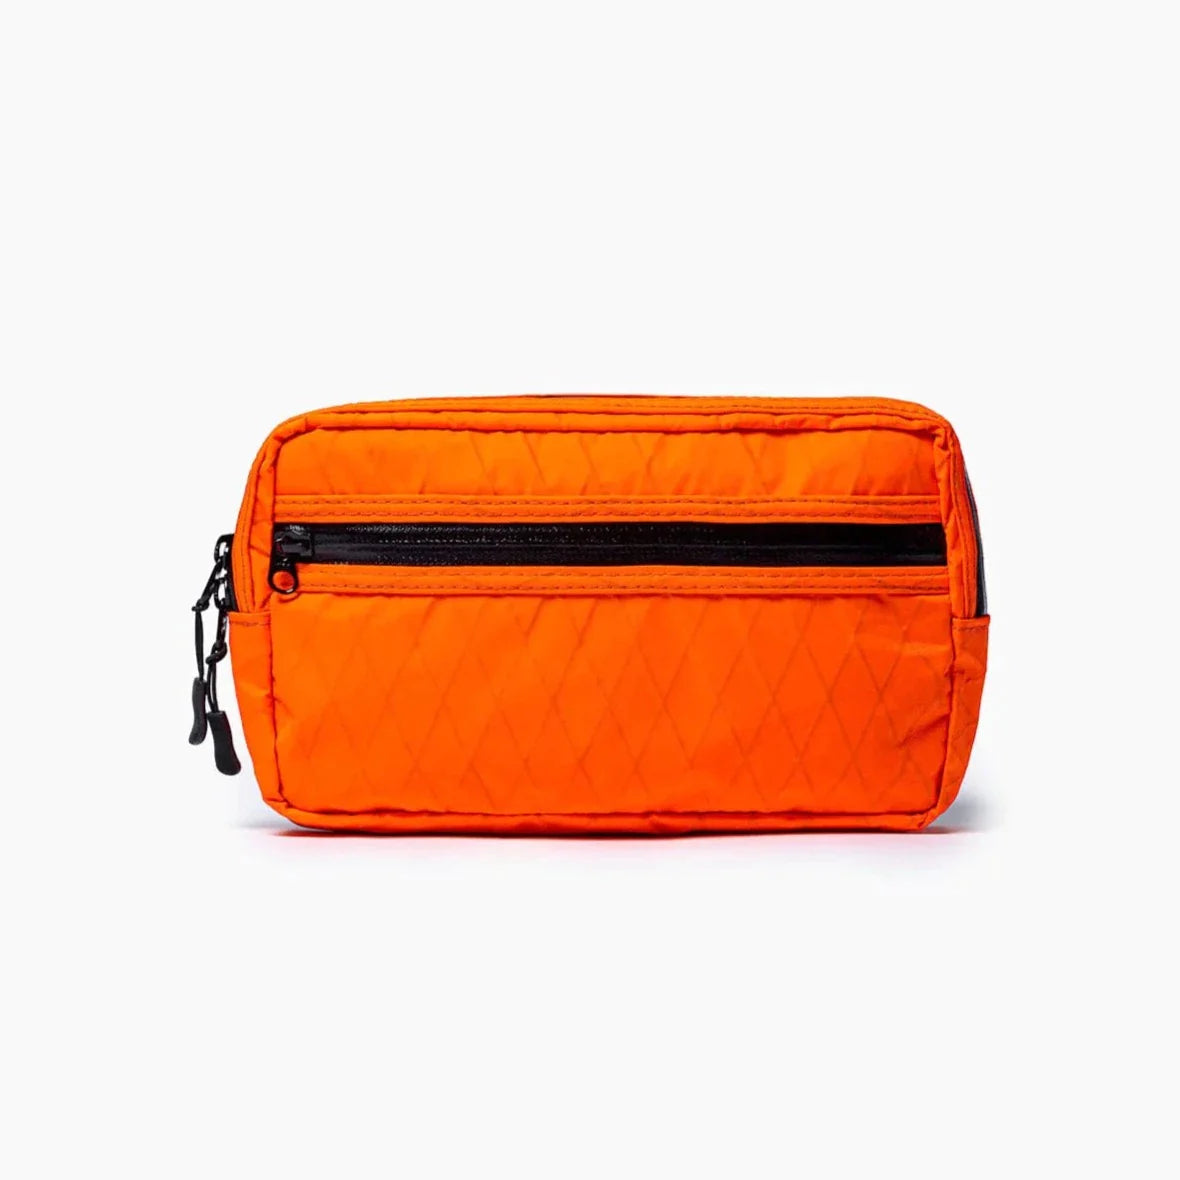 Notch Bag - Orange